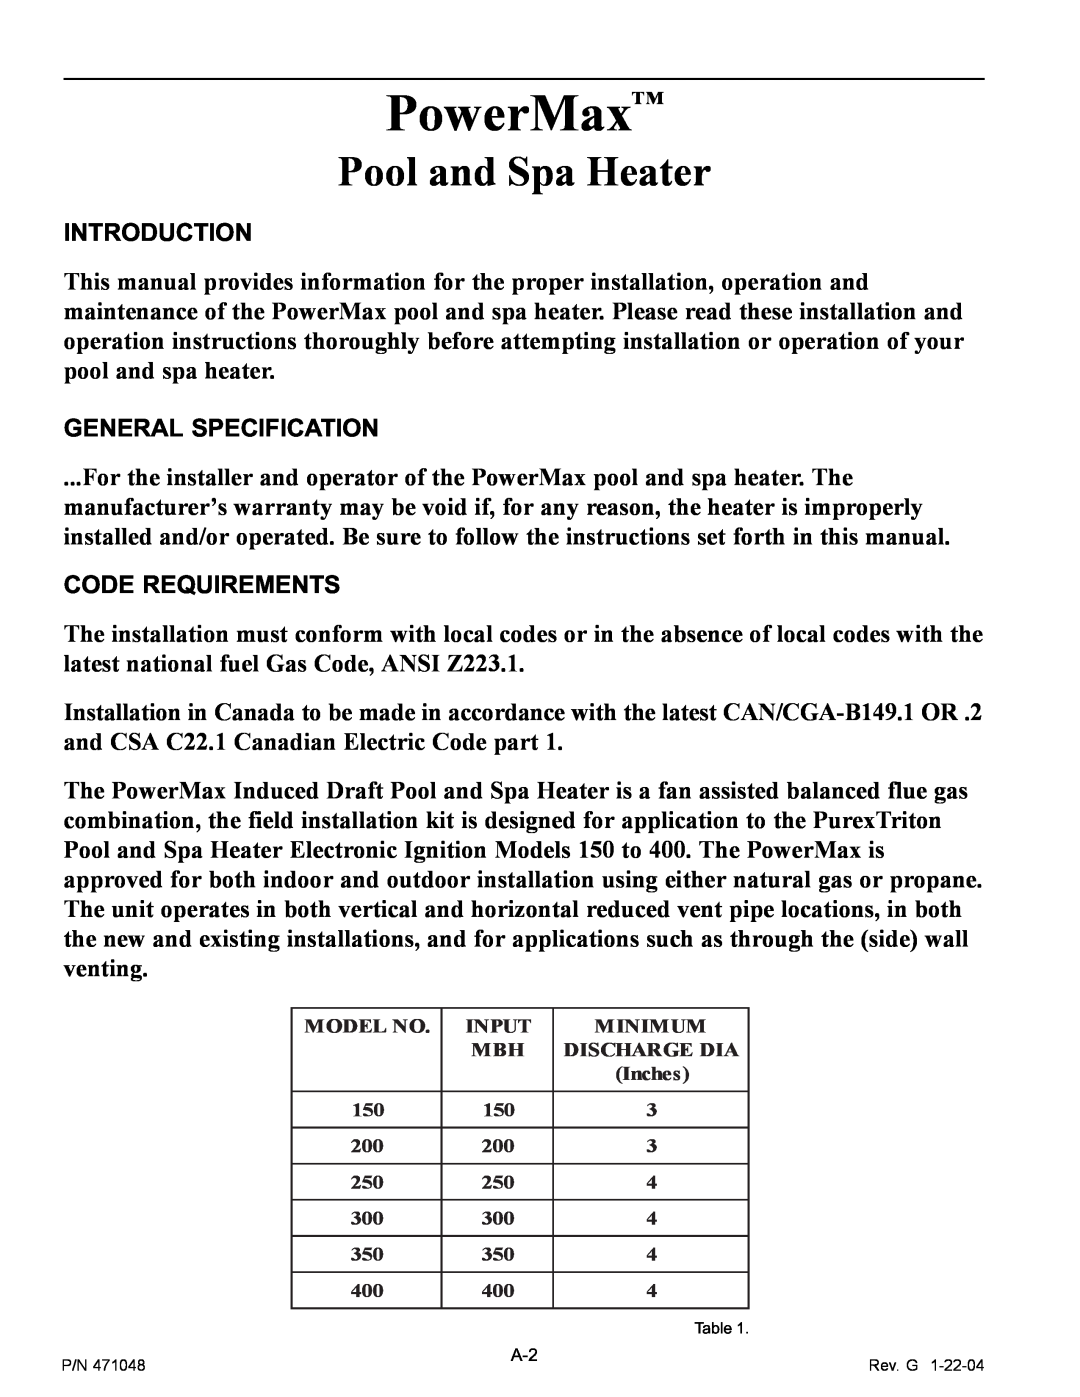 Pentair 100 installation manual PowerMax, Pool and Spa Heater 